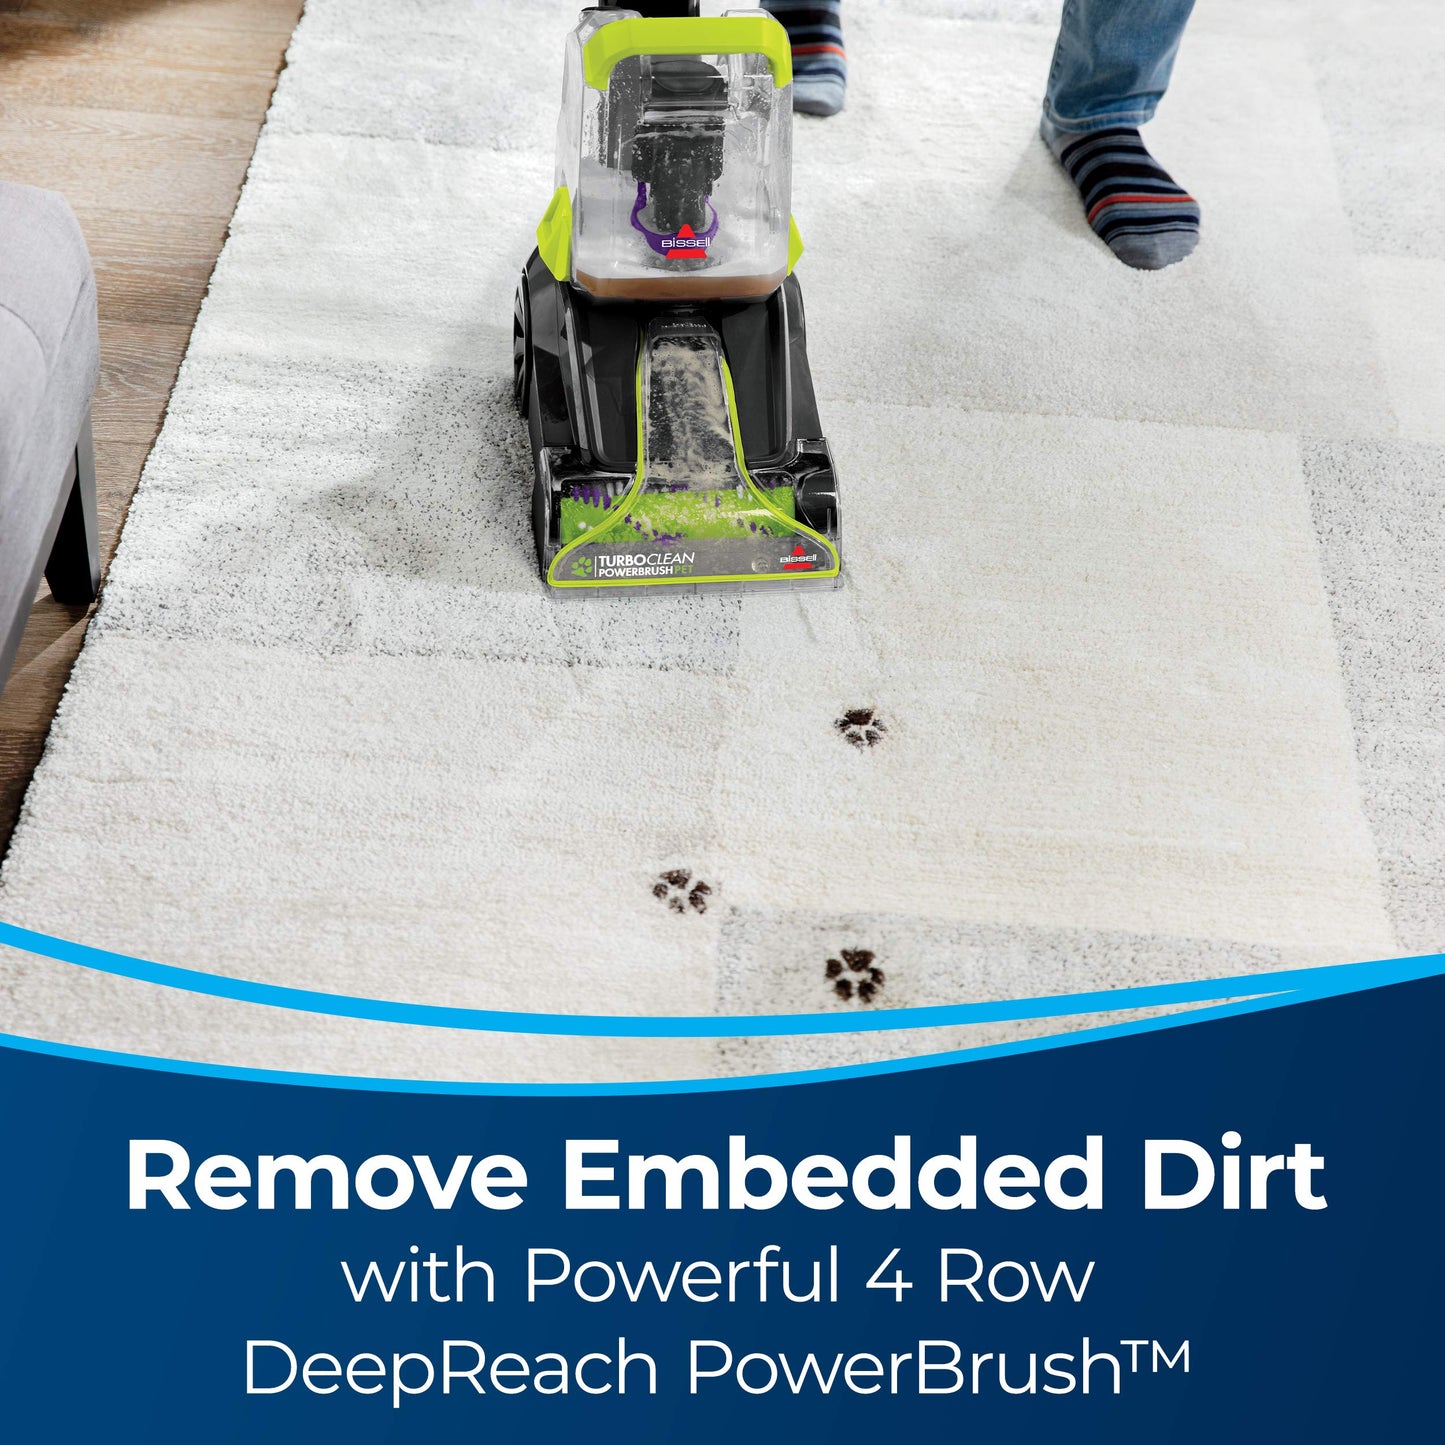 Bissell TurboClean PowerBrush Pet Carpet Cleaner - 2987, Green/Black